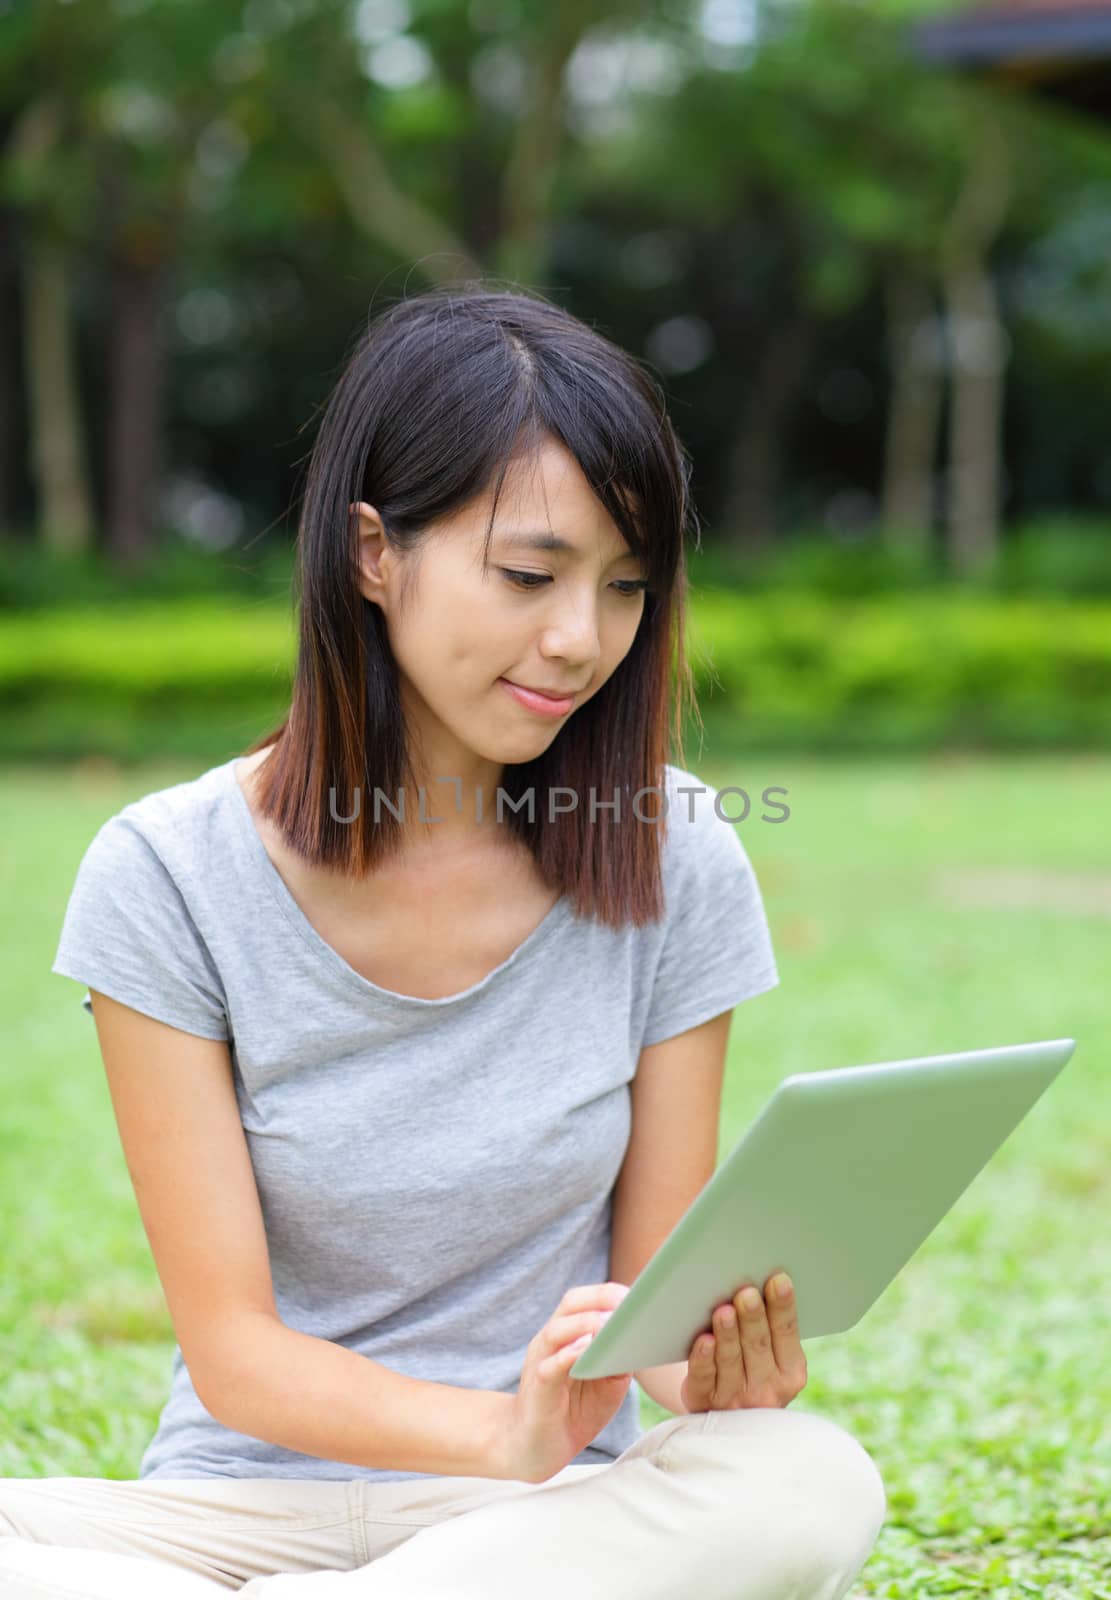 Asian woman looking at computer tablet